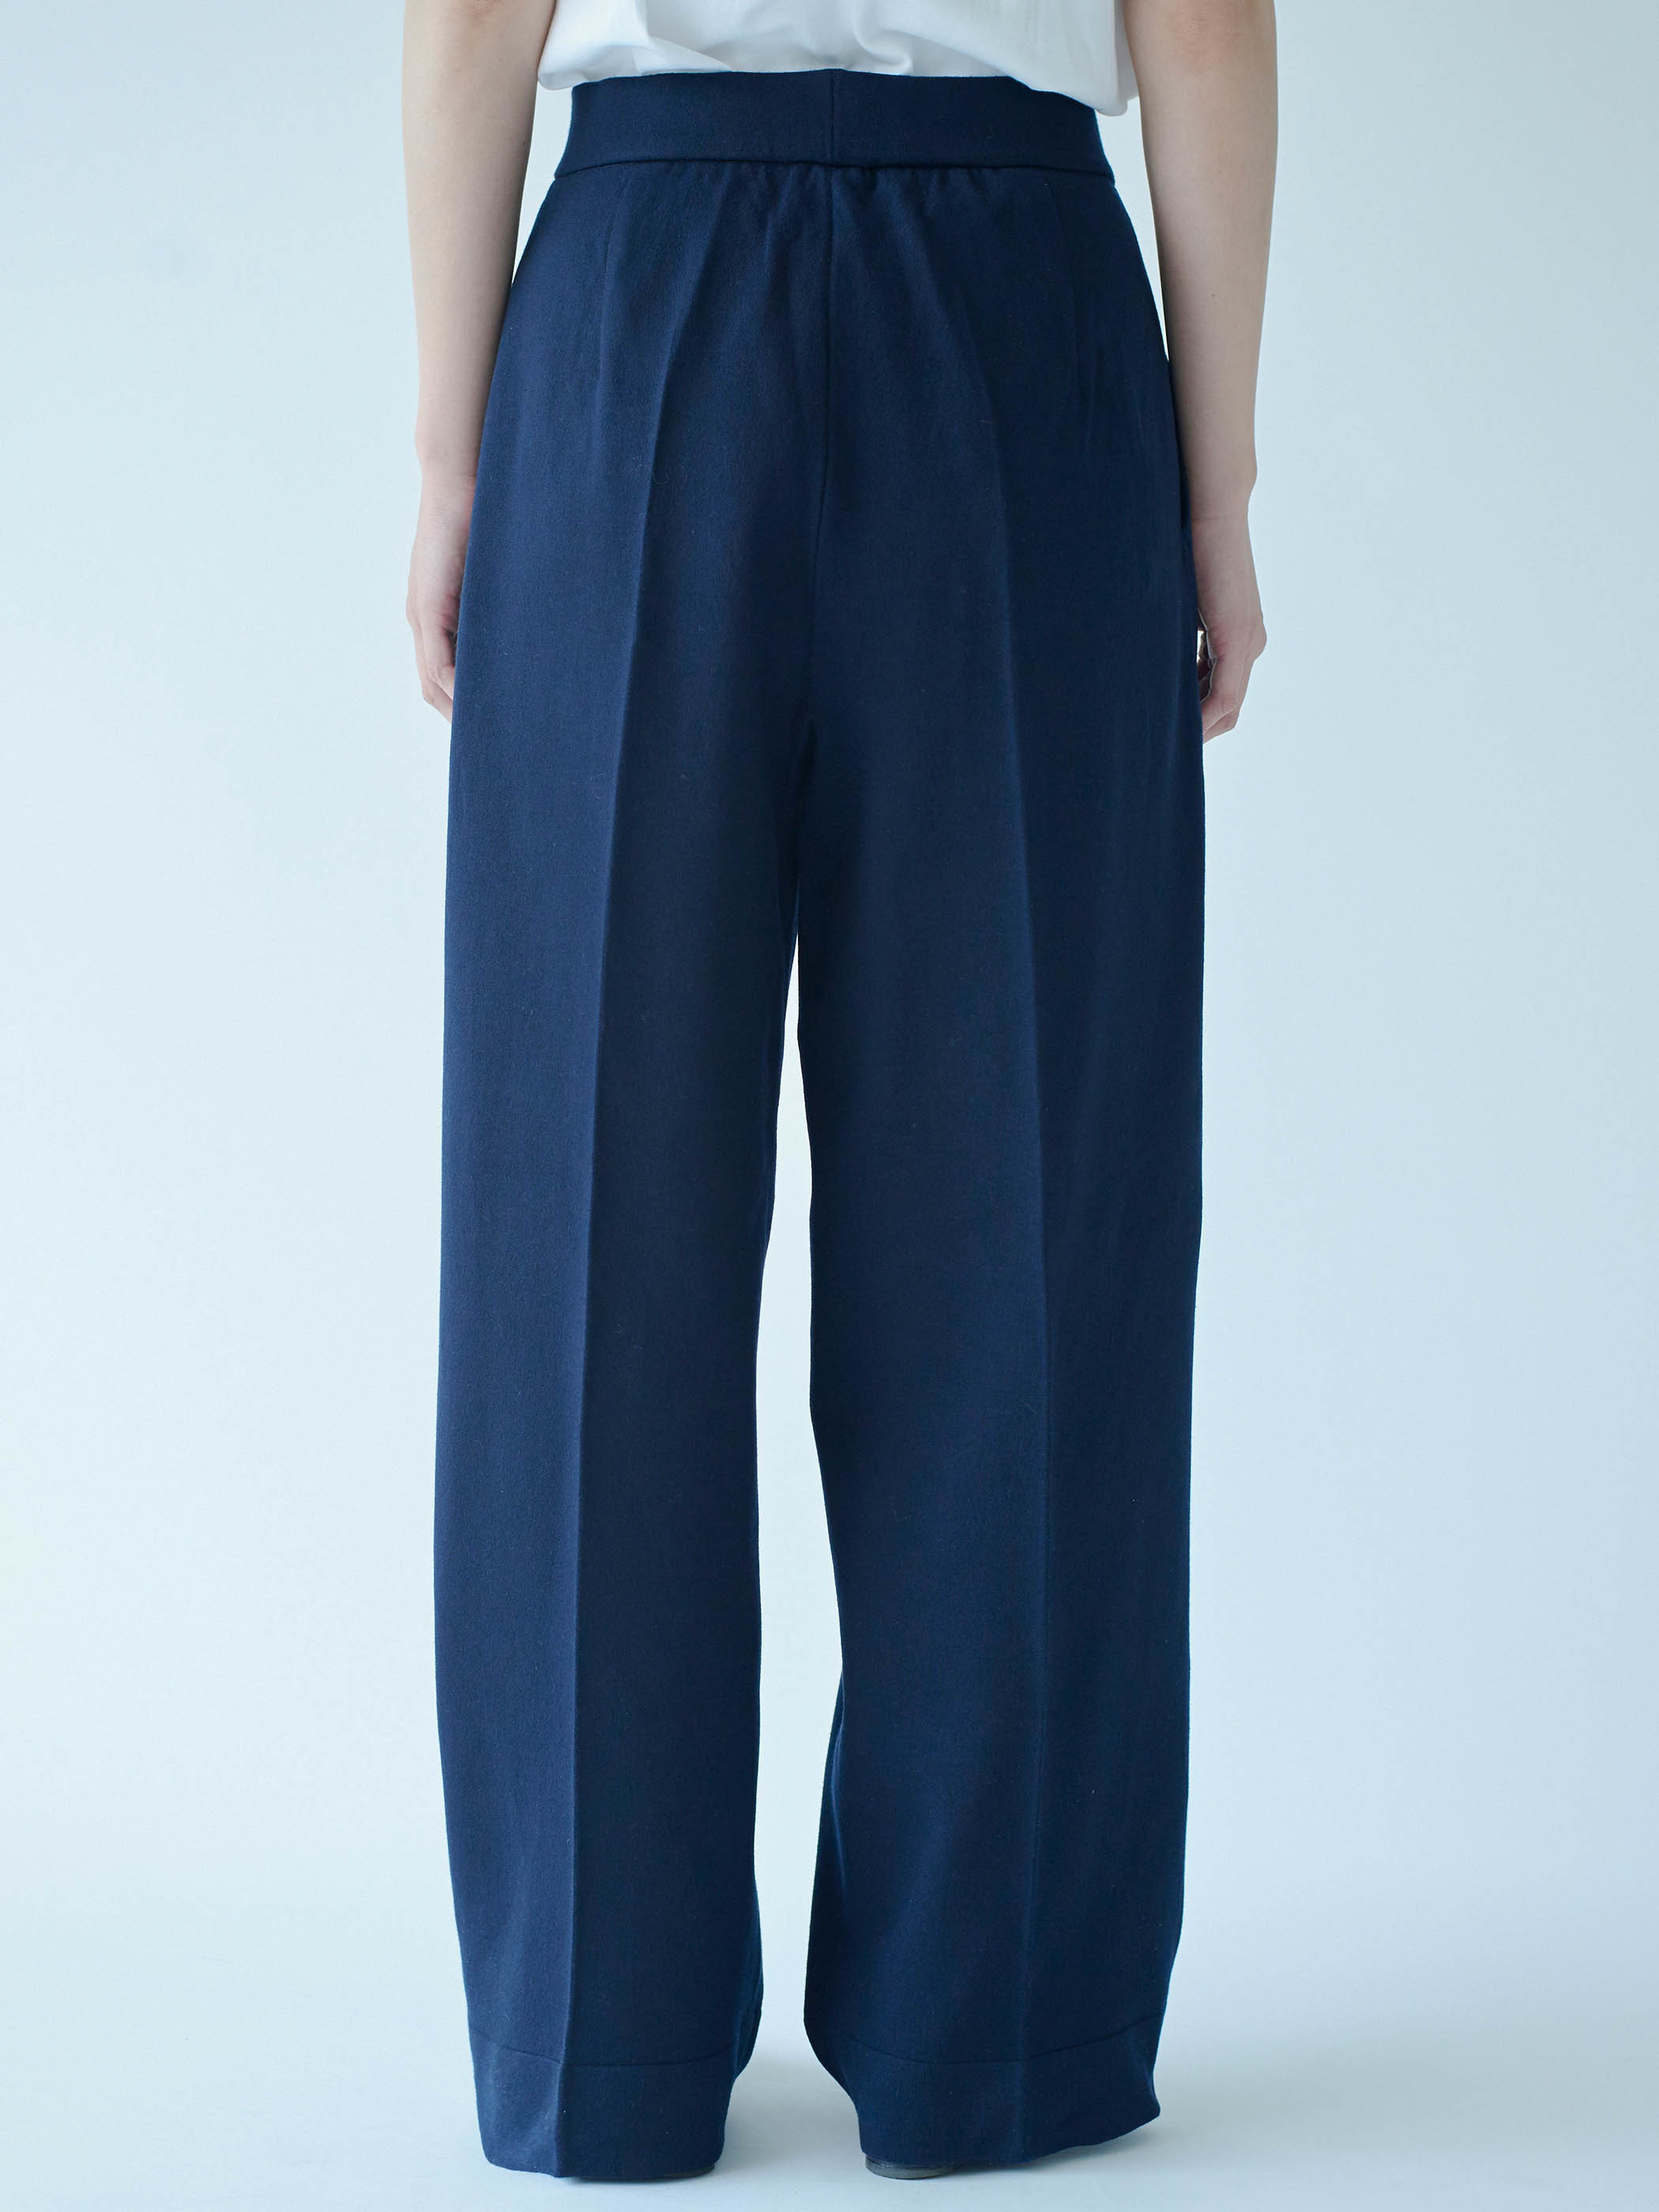 Work Wear collection Women's Wide Pants Navy(ワイドパンツ・ネイビー)